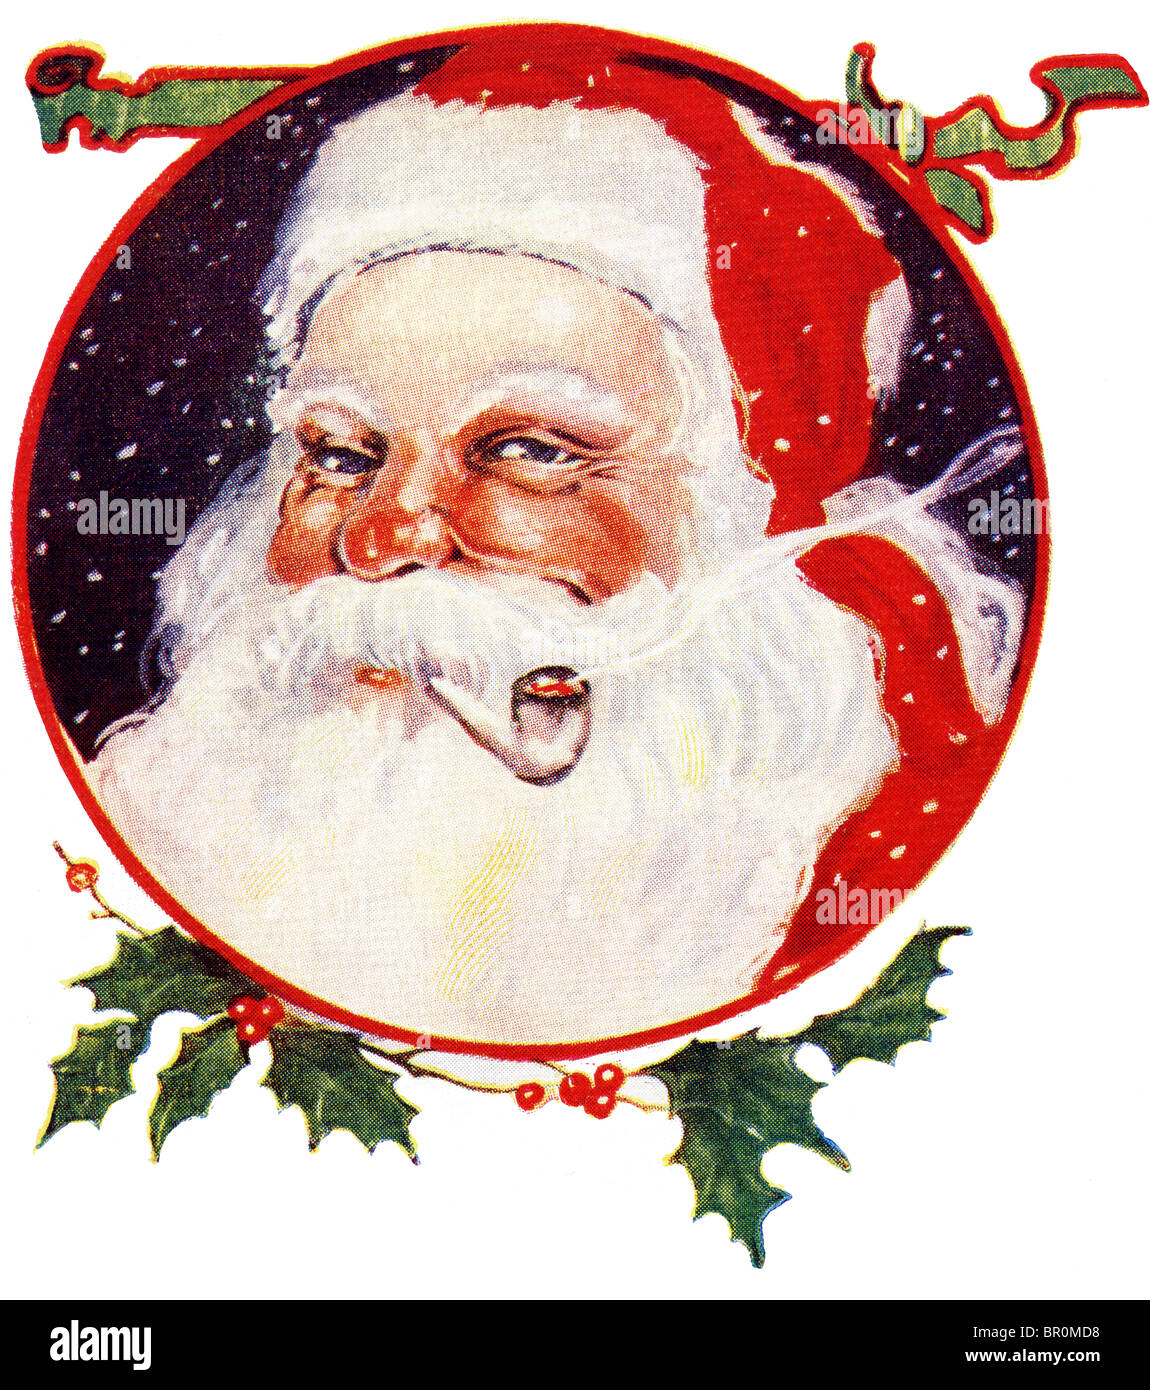 Vintage Christmas card of Santa Claus smoking a pipe Stock Photo